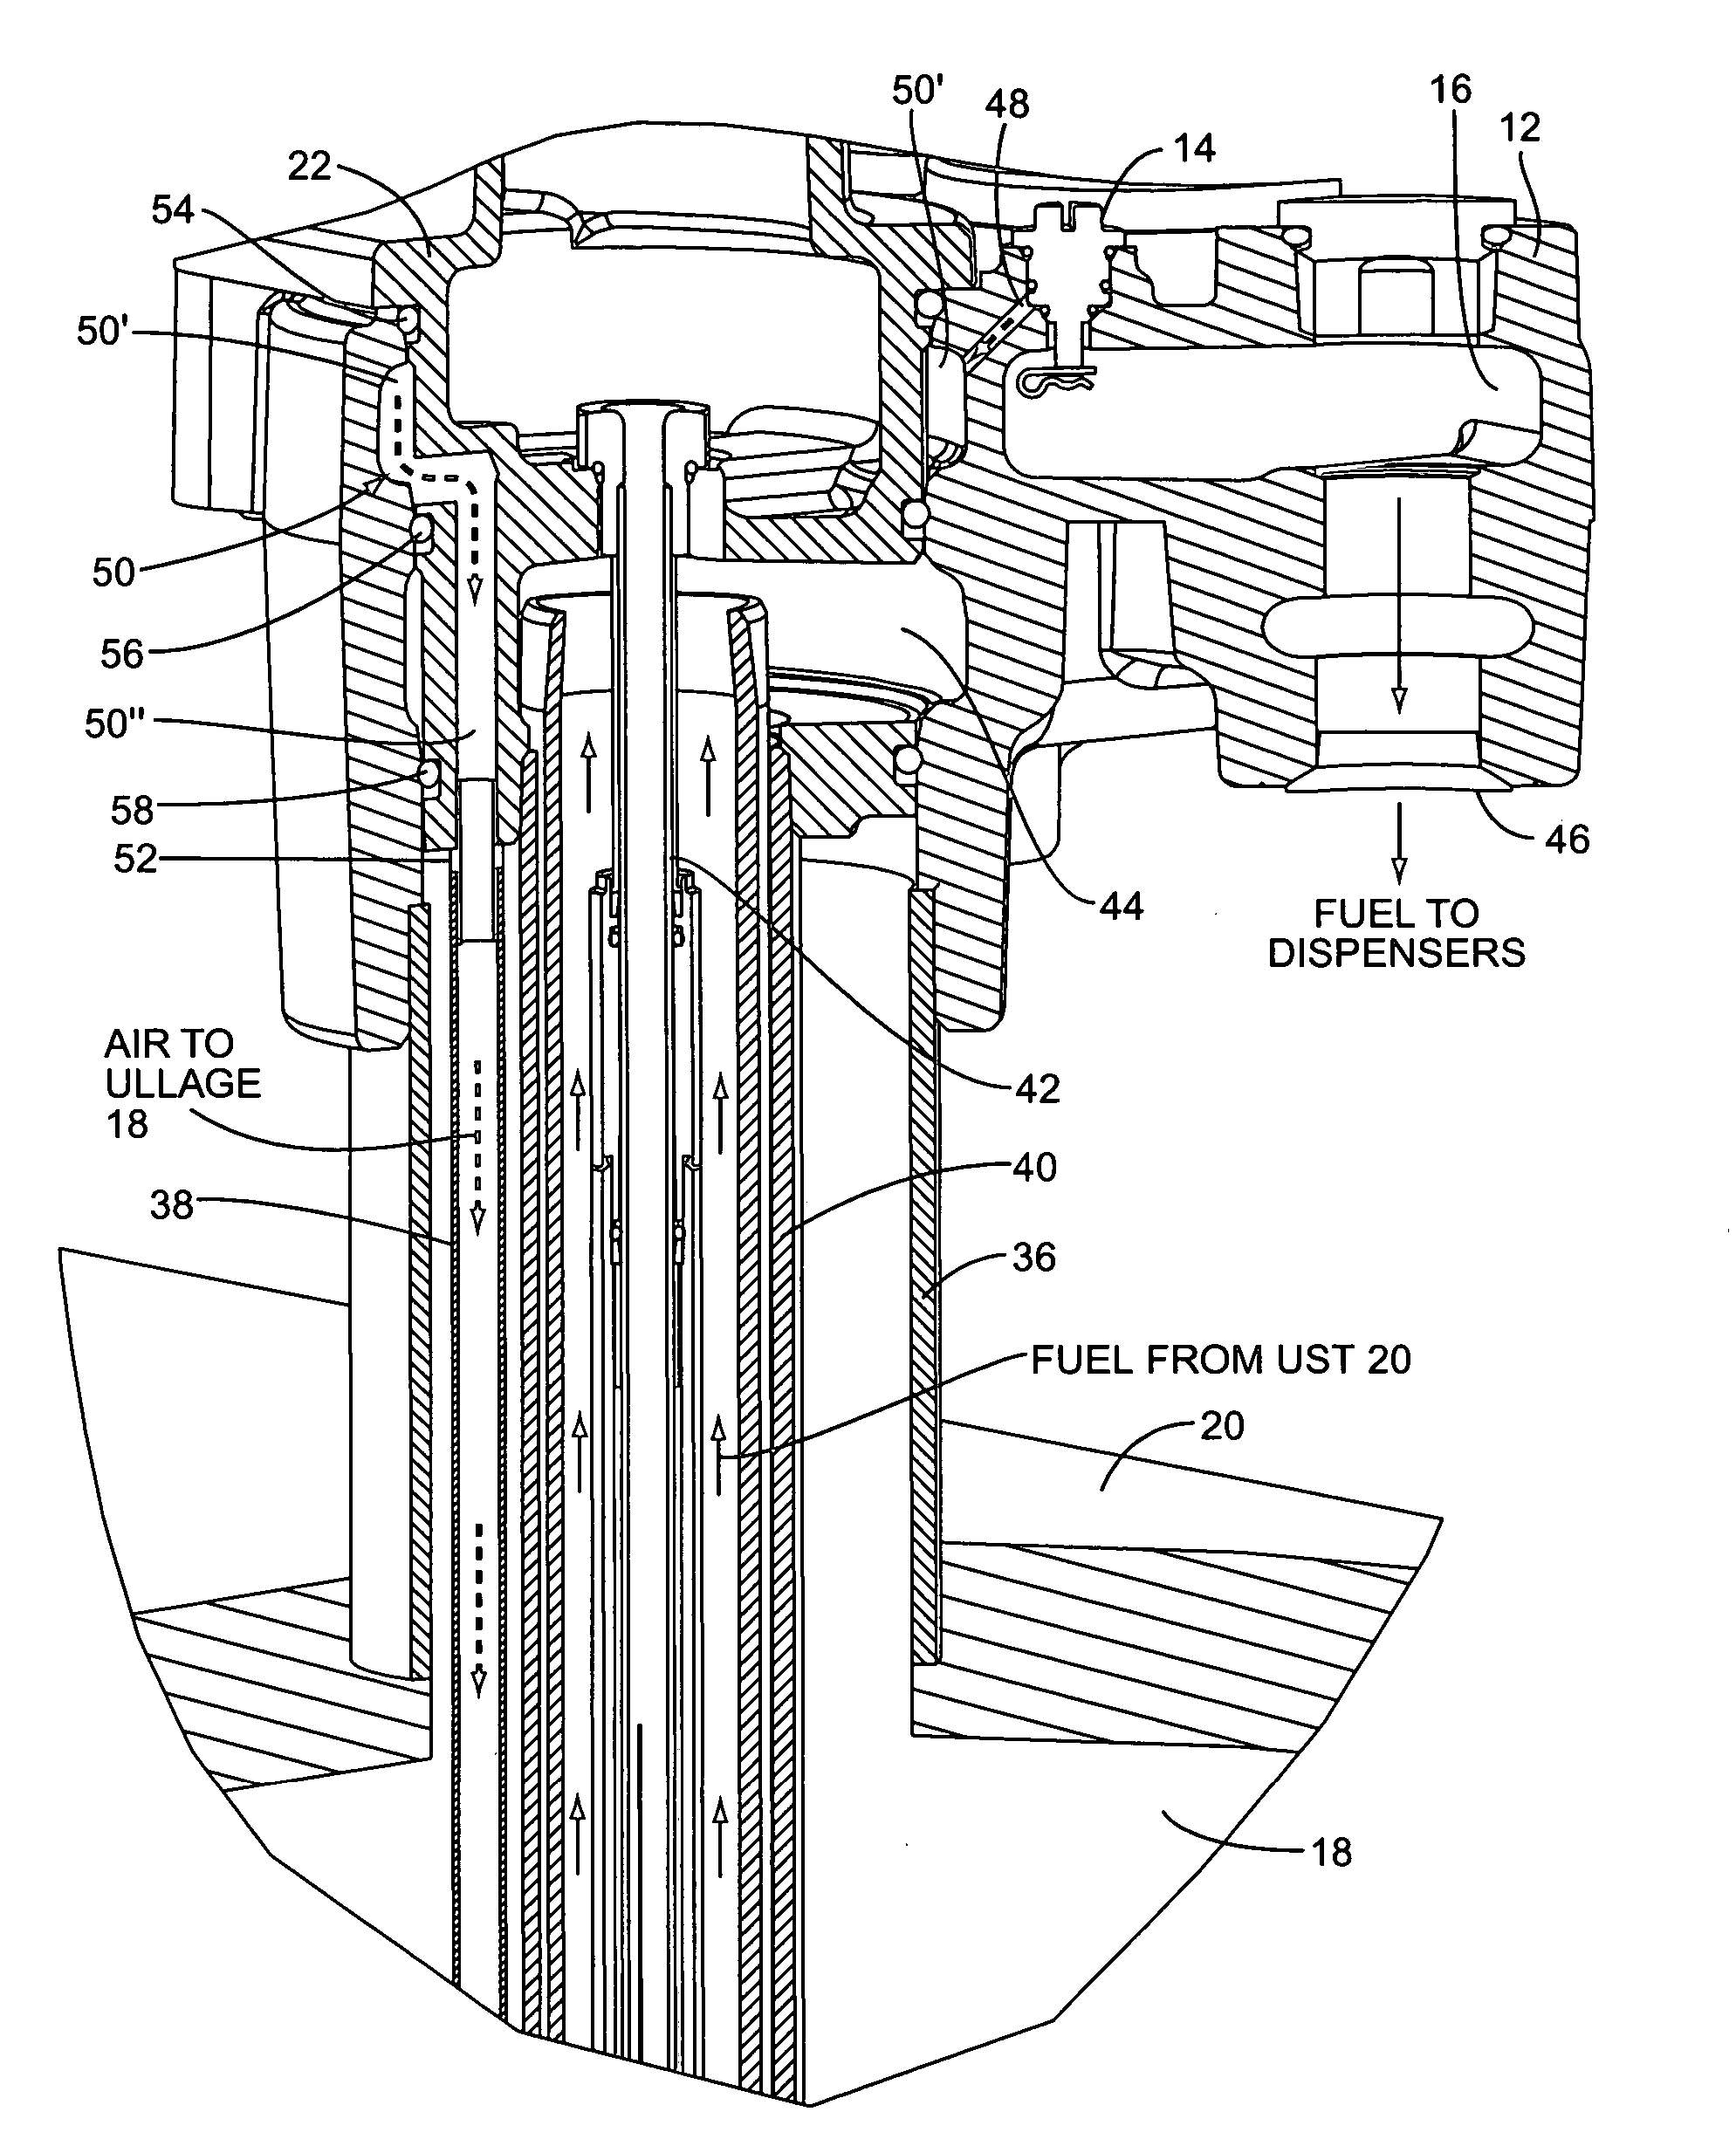 Air bleed mechanism for a submersible turbine pump